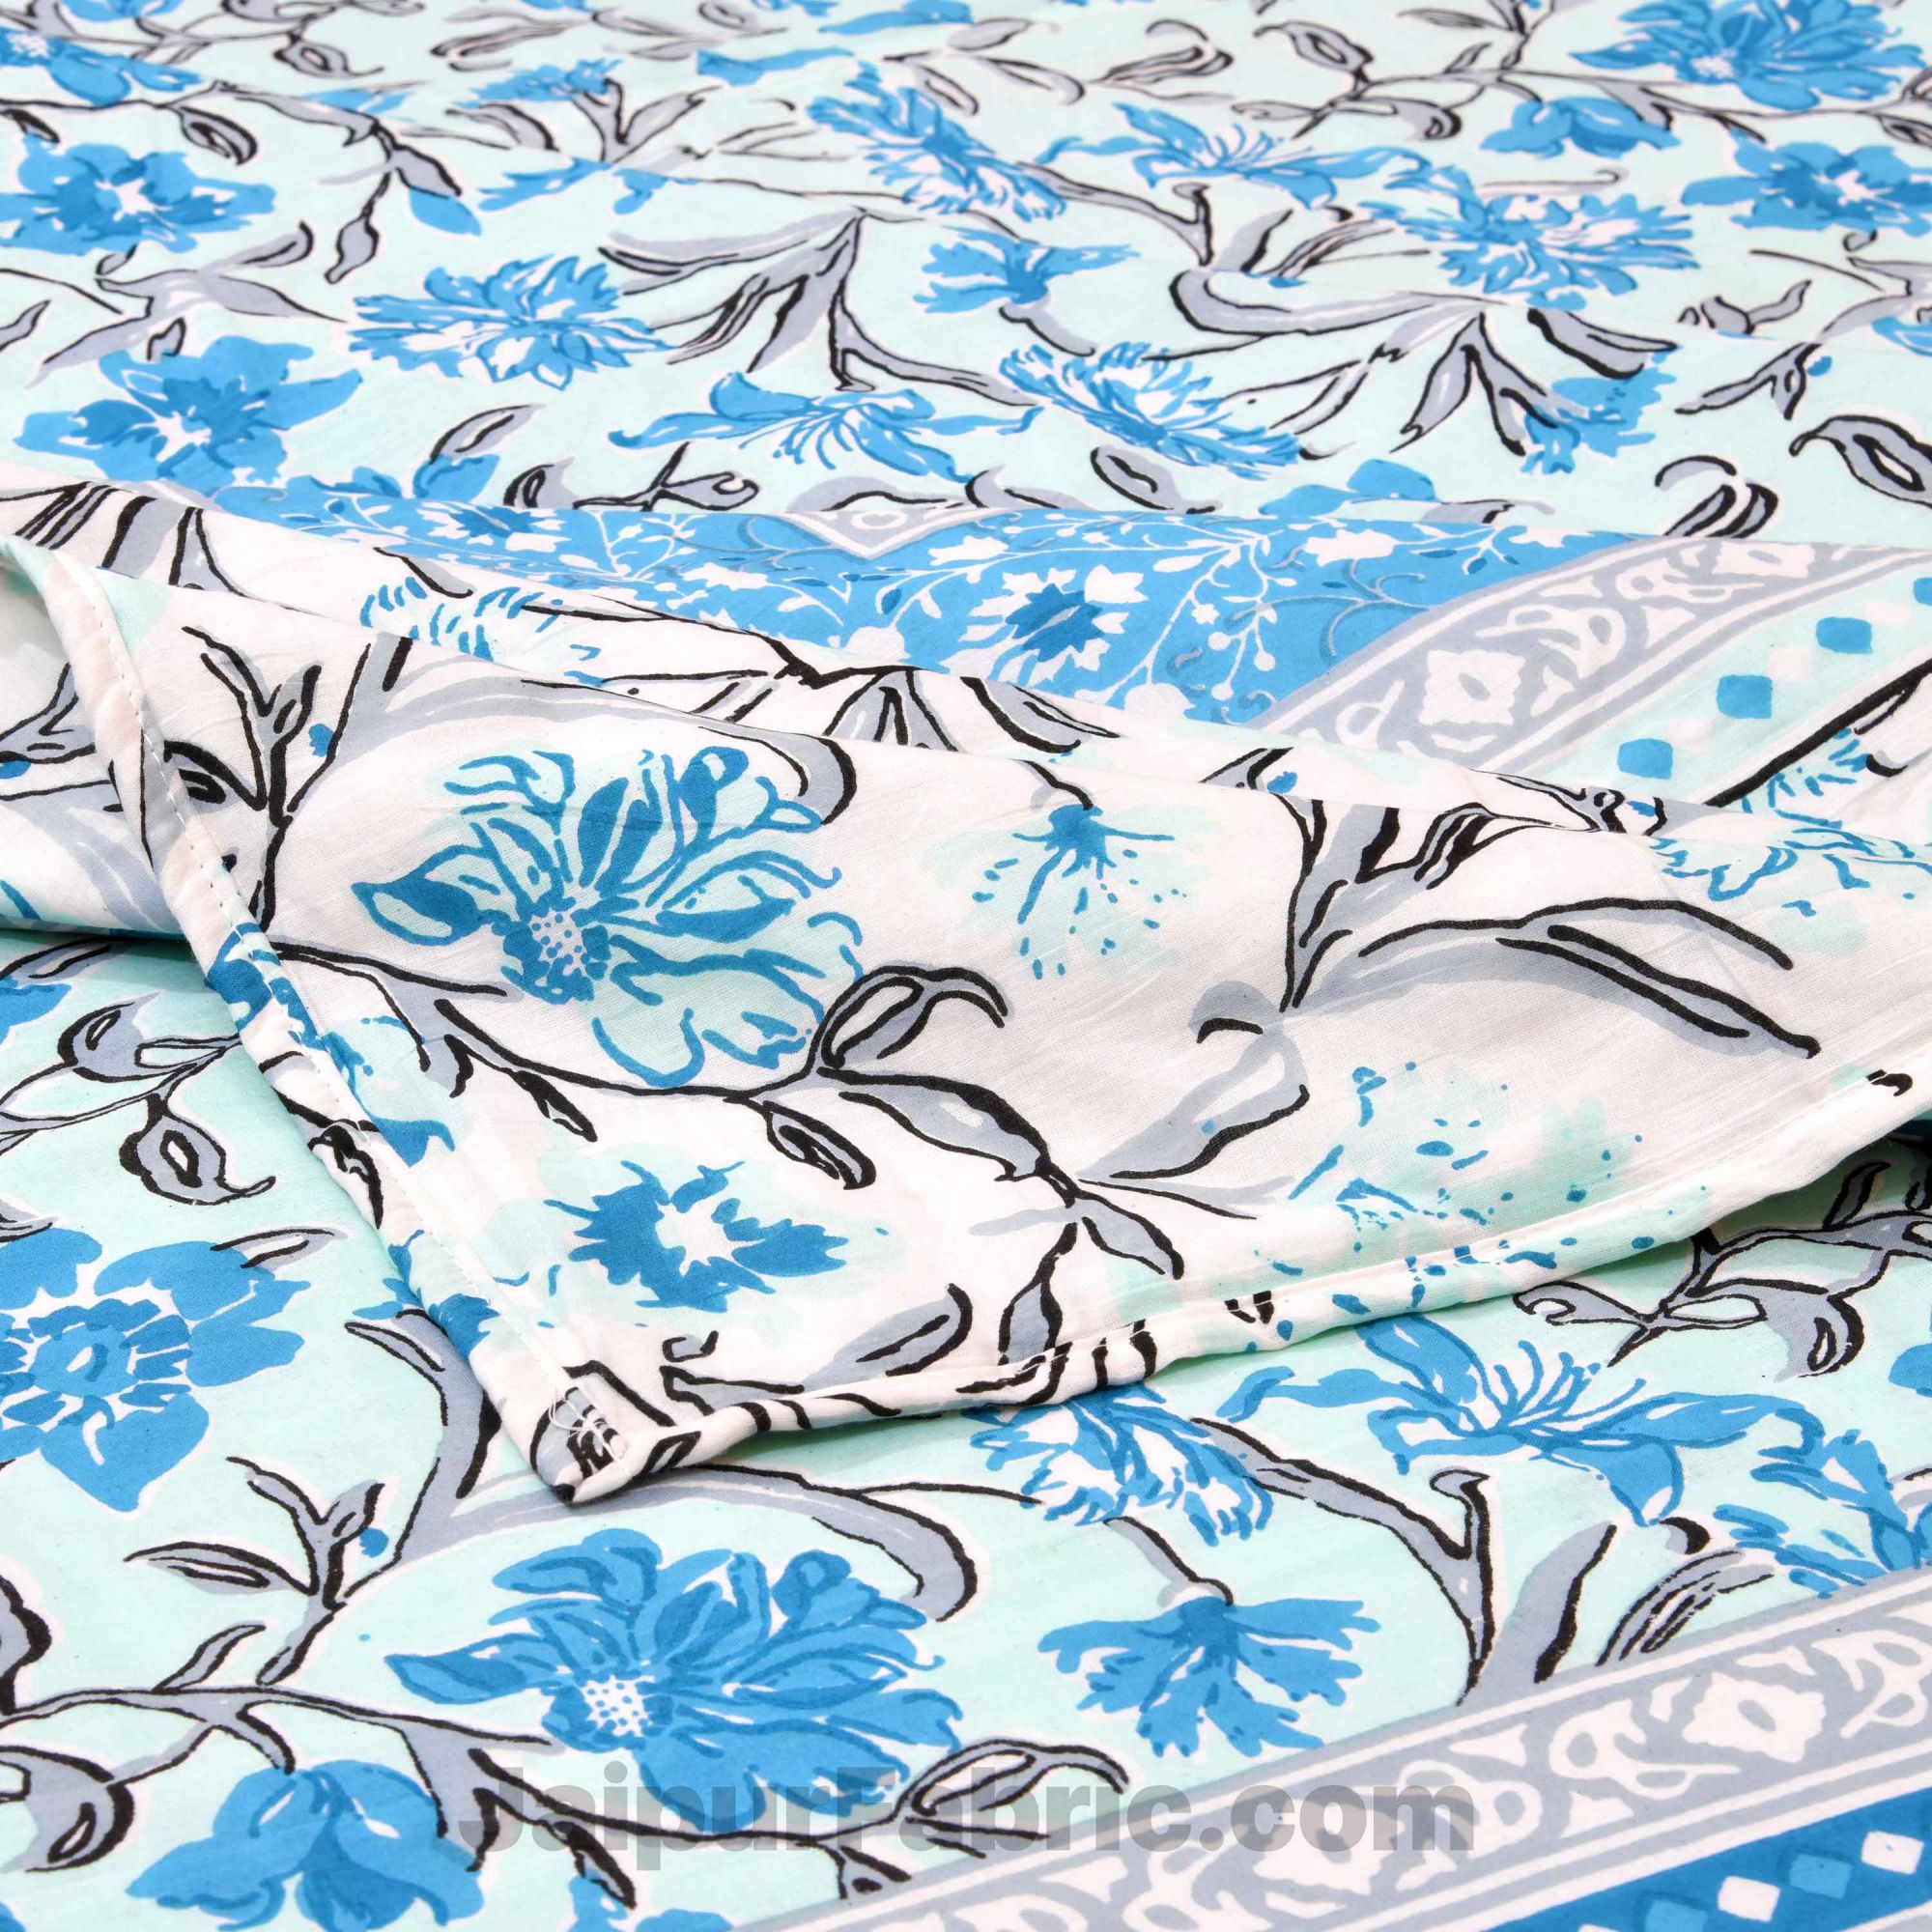 Lightweight Reversible Double Bed Dohar Blue Leaves FlowerSkin Friendly Pure Cotton MulMul Blanket / AC Comforter / Summer Quilt